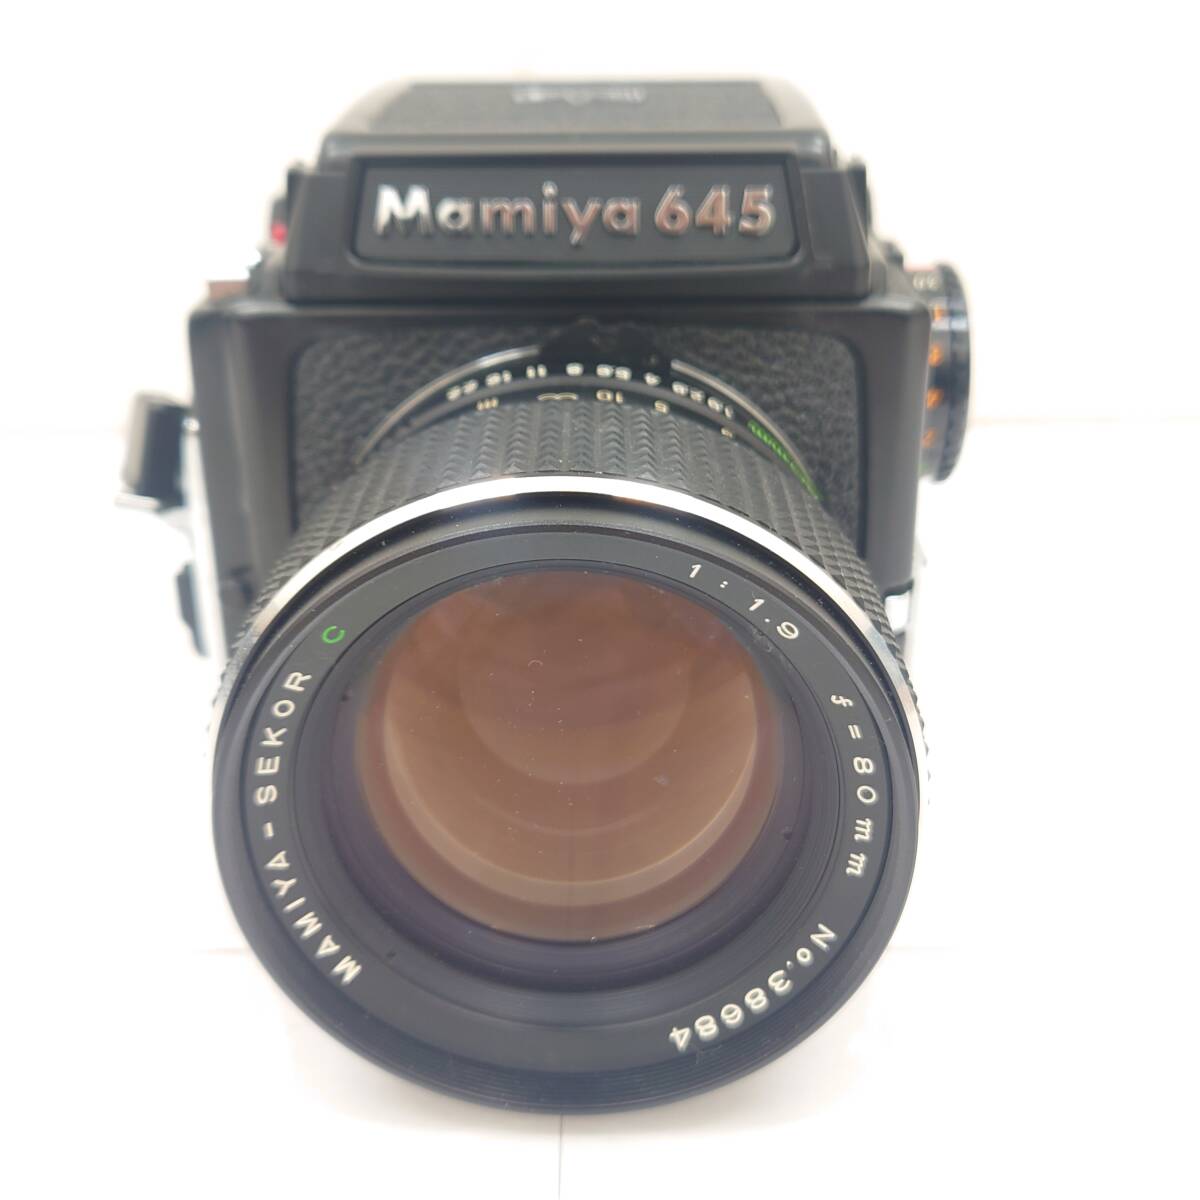 ★【Mamiya マミヤ】Mamiya 645 M645 1000S 中判カメラ フィルムカメラ レンズ付き MAMIYA-SEKOR C 1:1.9 f=80mm No.38684 ★15112の画像2